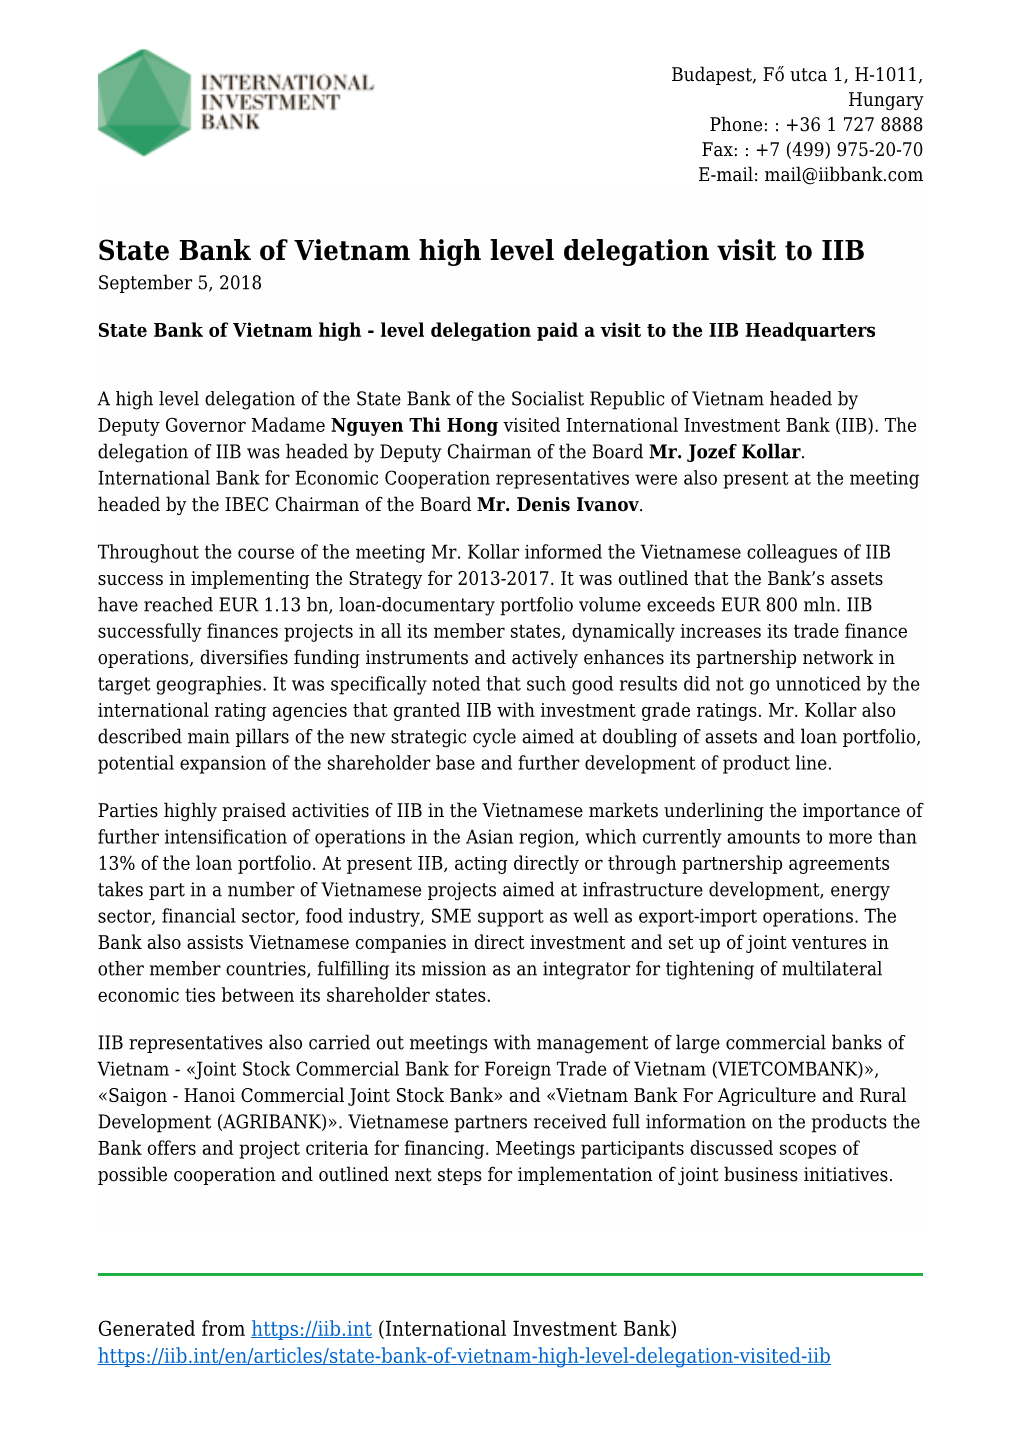 State Bank of Vietnam High Level Delegation Visit to IIB September 5, 2018